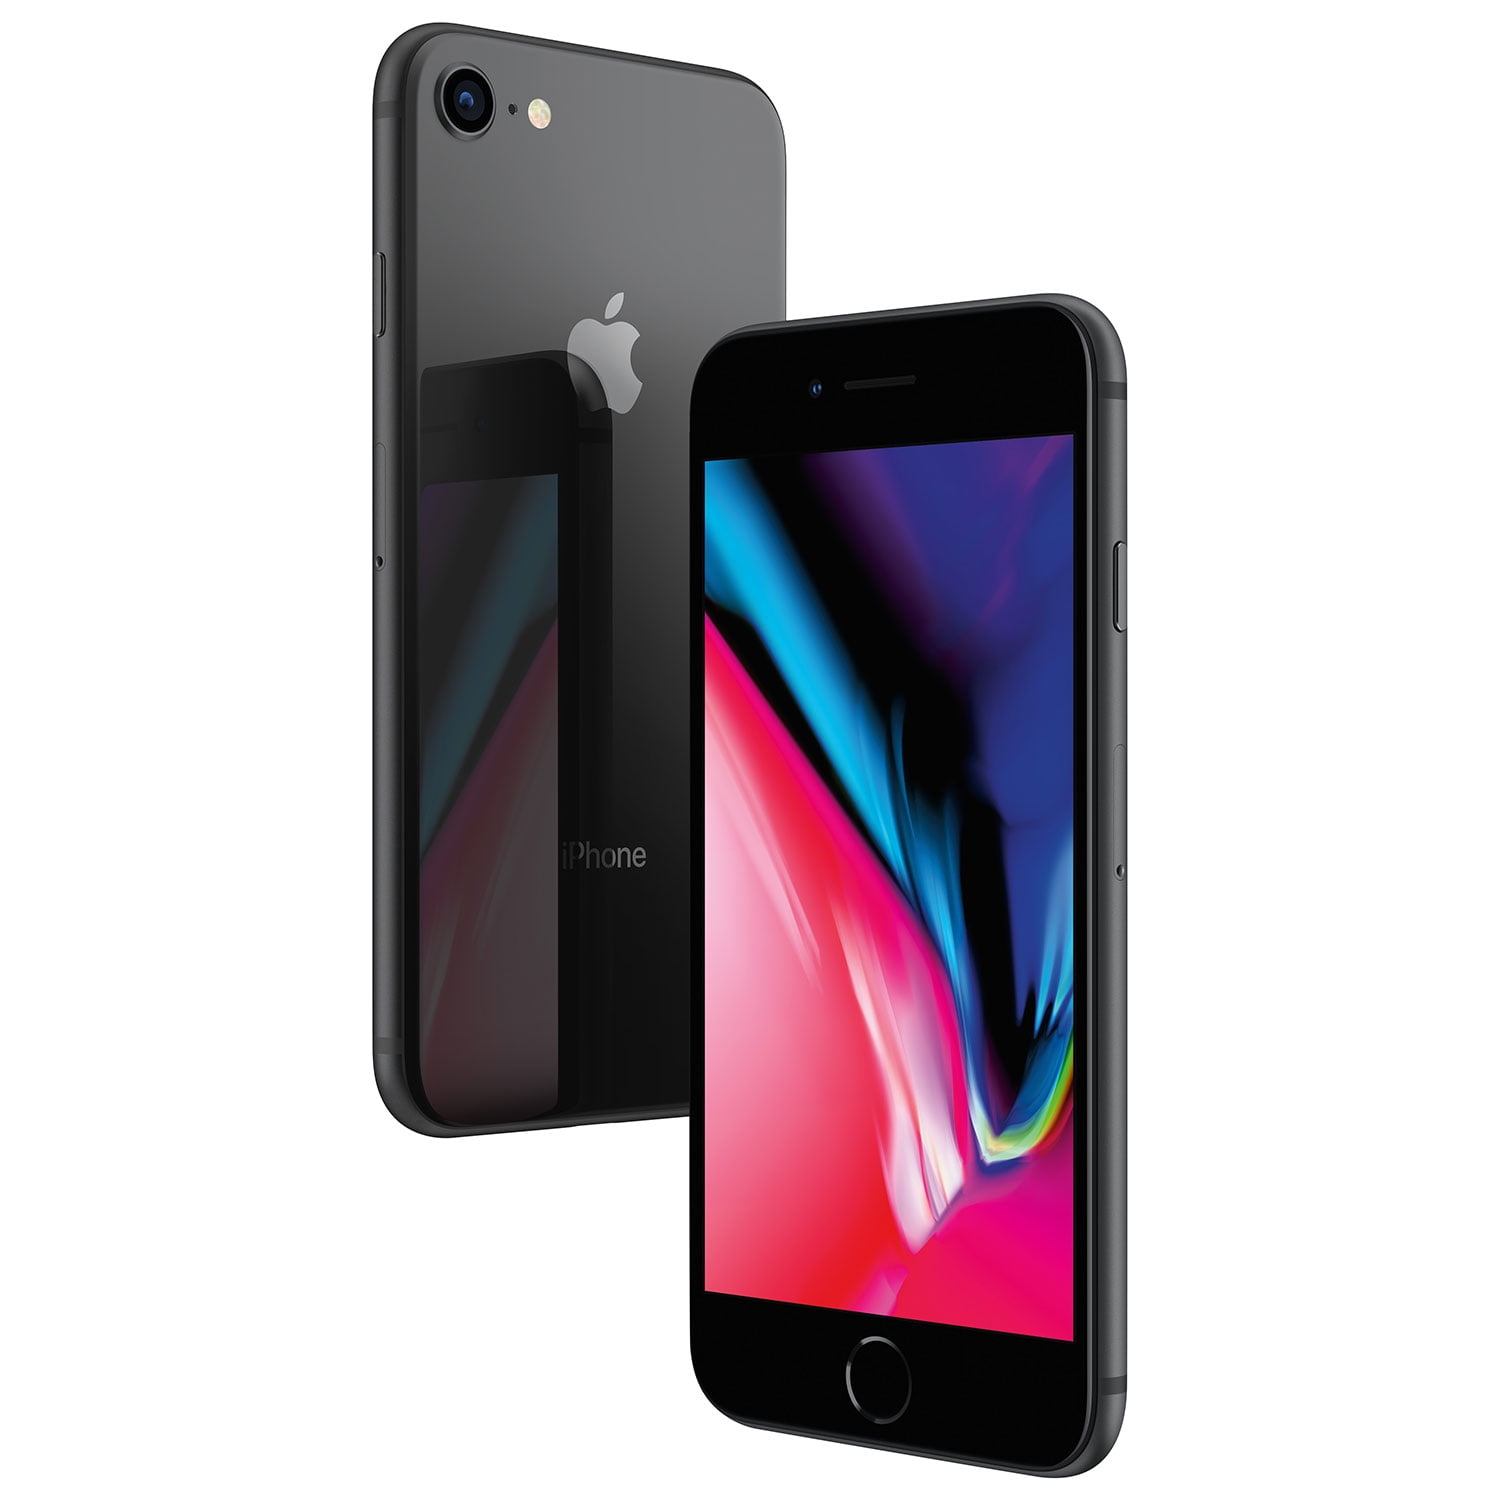 Apple iPhone 8 64GB Smartphone | Certified Refurbished Like New